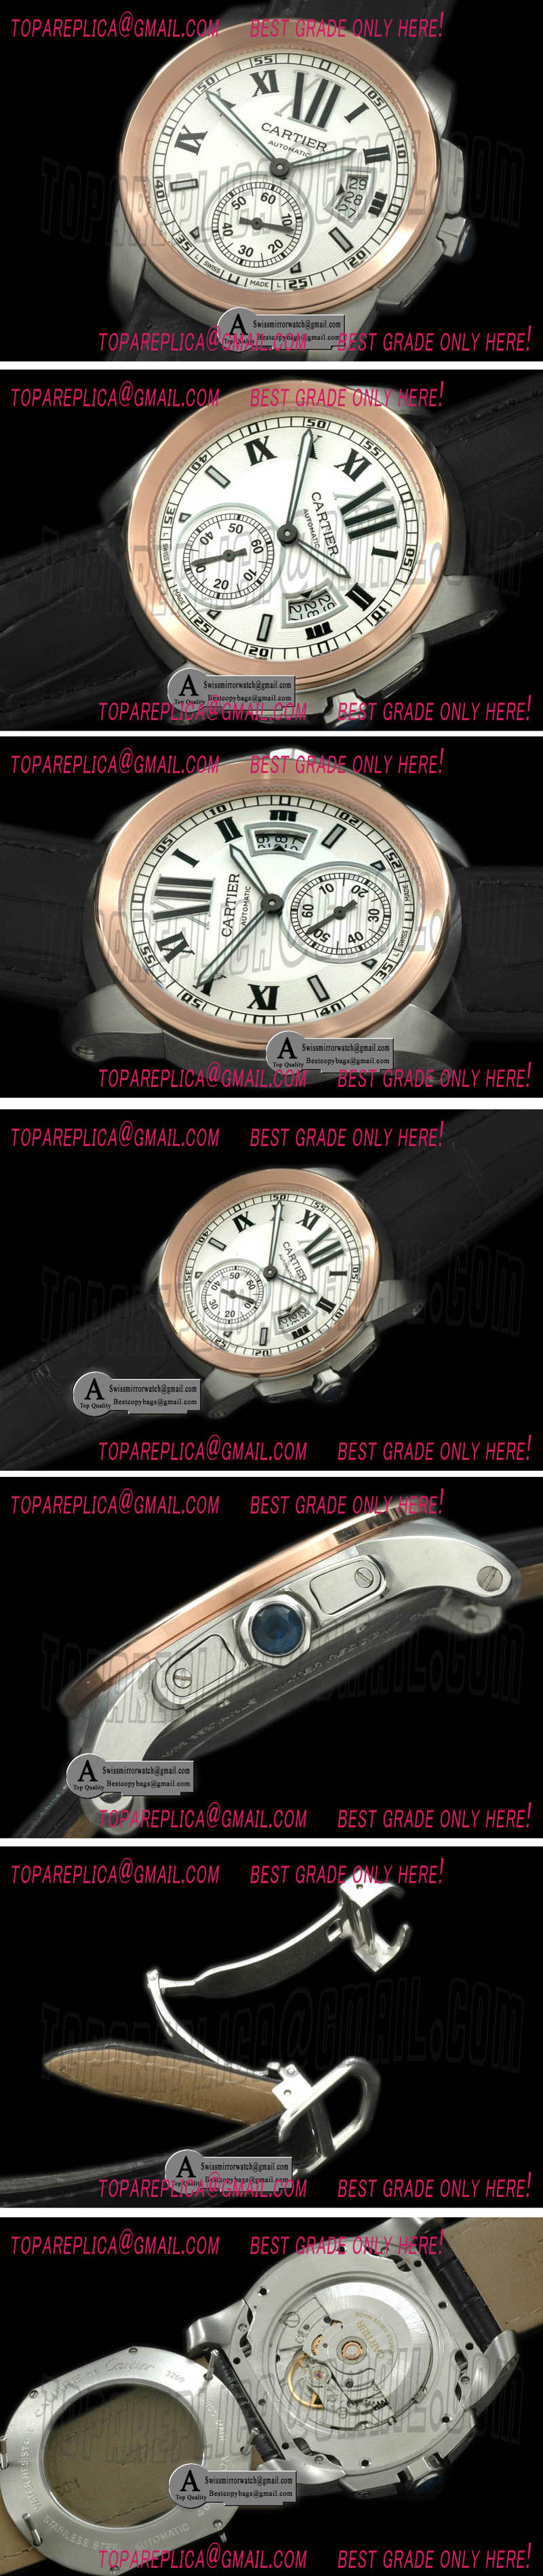 Cartier W7100039 Calibre de Cartier SS/Rose Gold/Leather White Asian 2824 28800bph Replica Watches